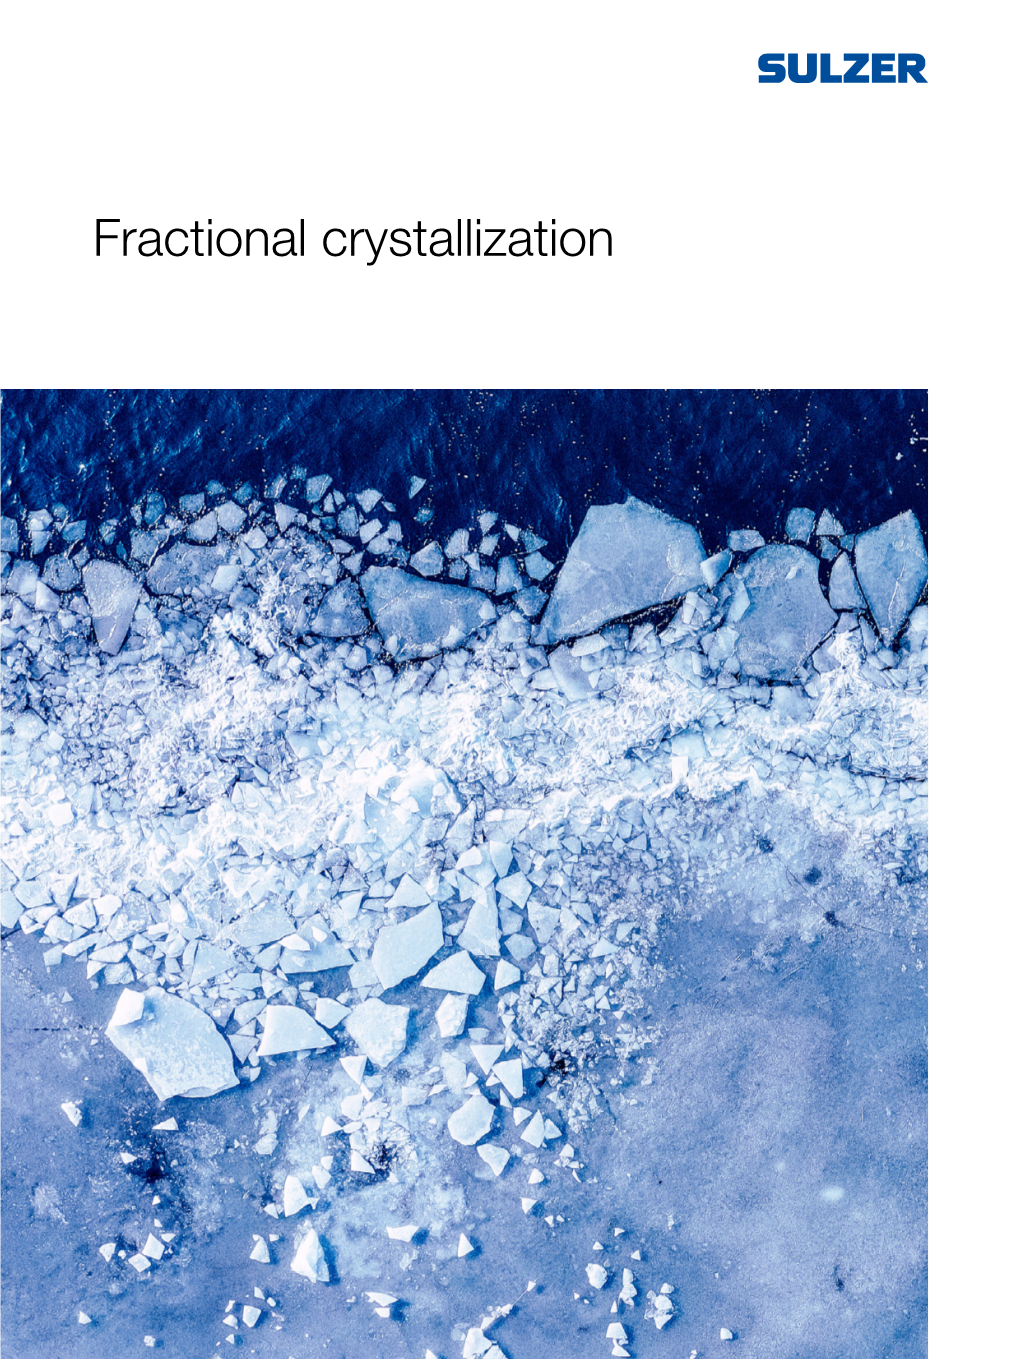 Fractional Crystallization Why Crystallization? Why Sulzer?